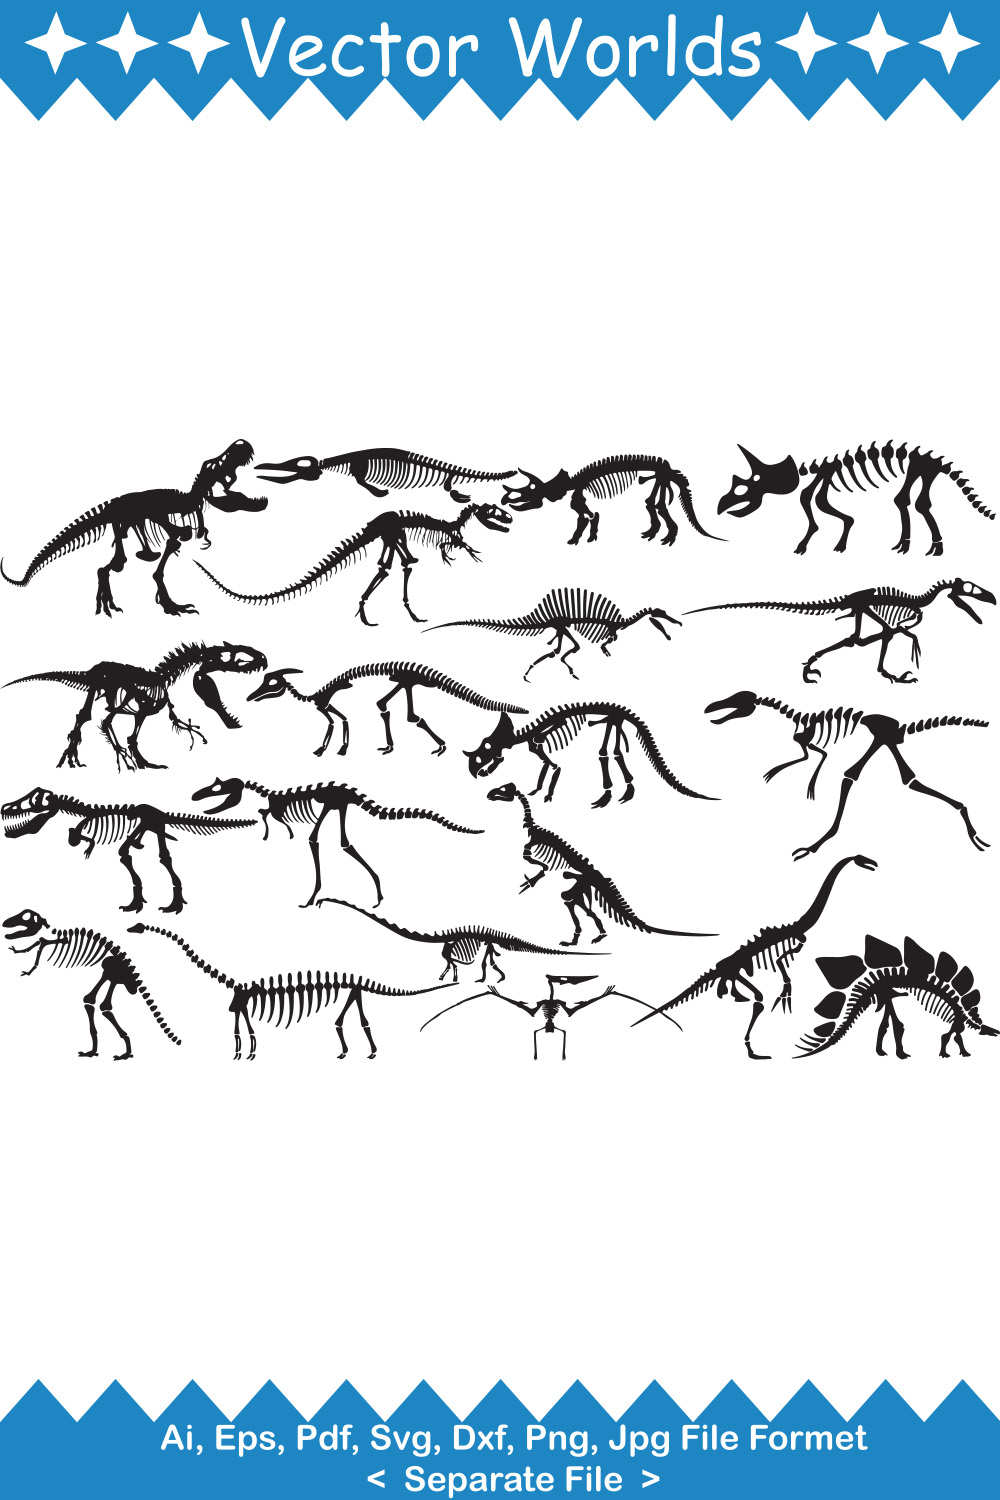 Group of dinosaurs running across a field.